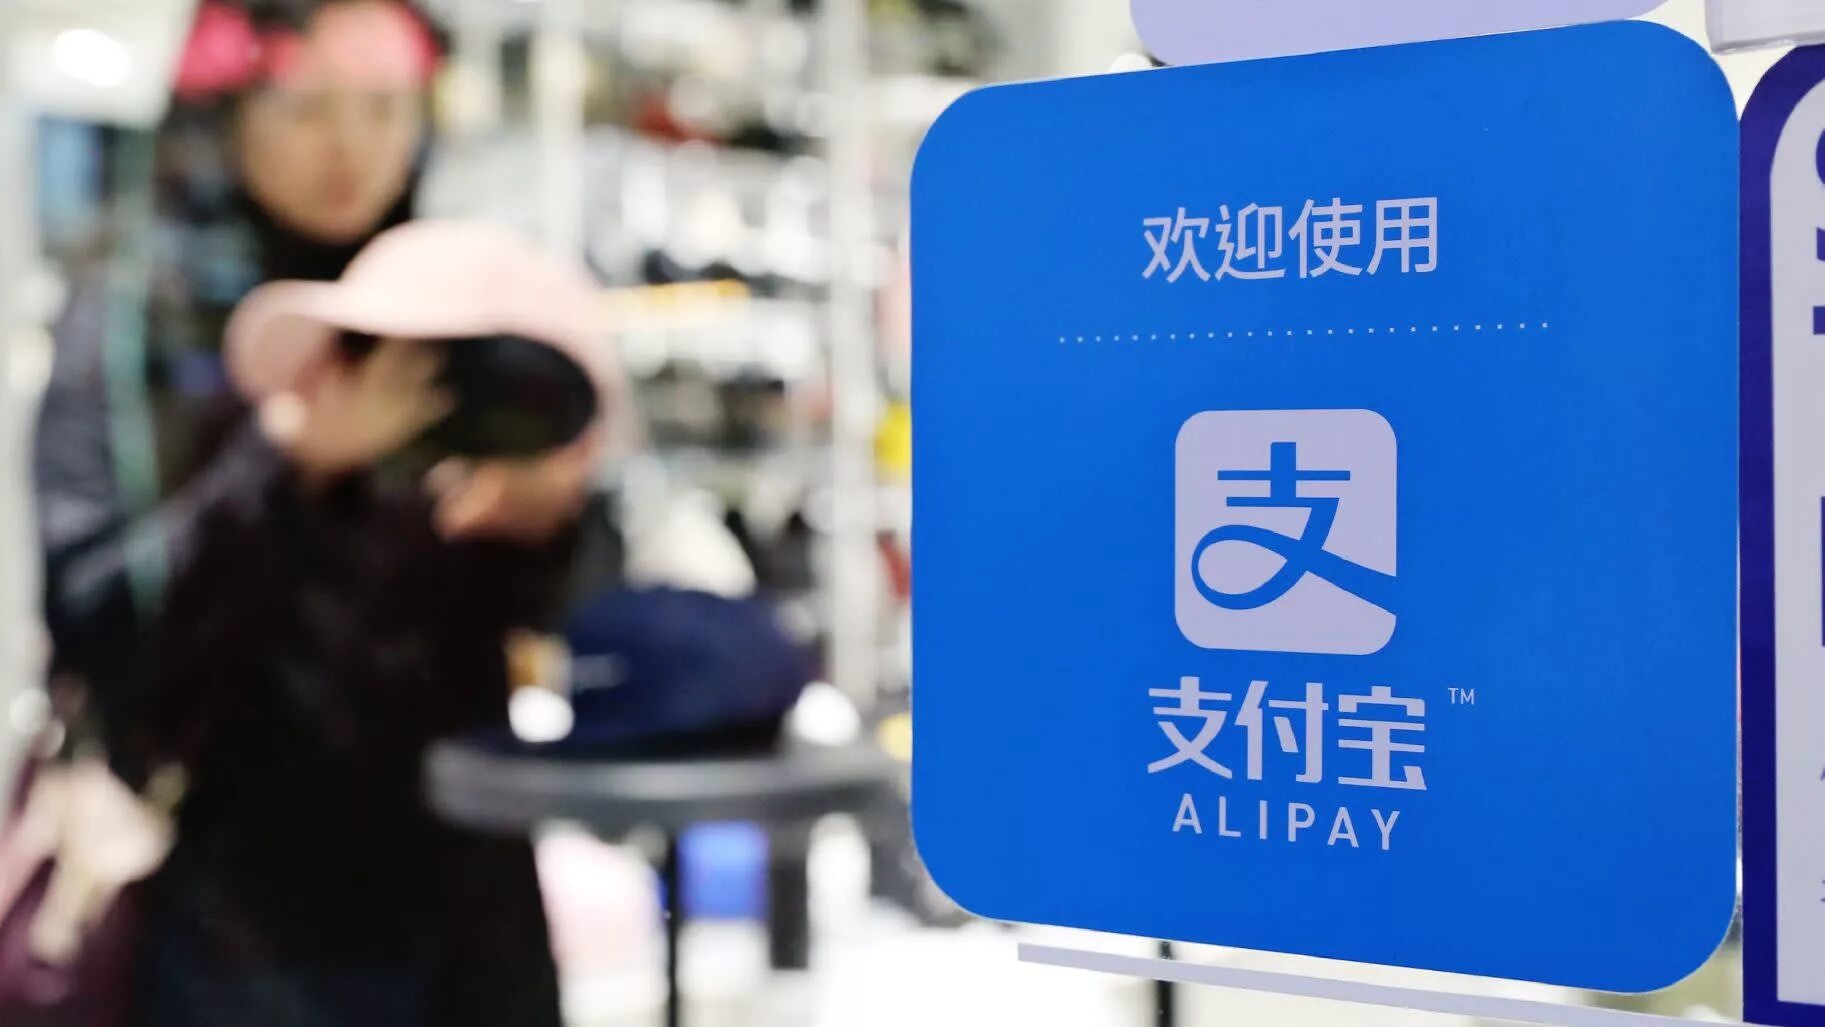 Alipay com. Alipay логотип. Китайская платежная система. Alipay платежная система. Китайских платежных систем Alipay.